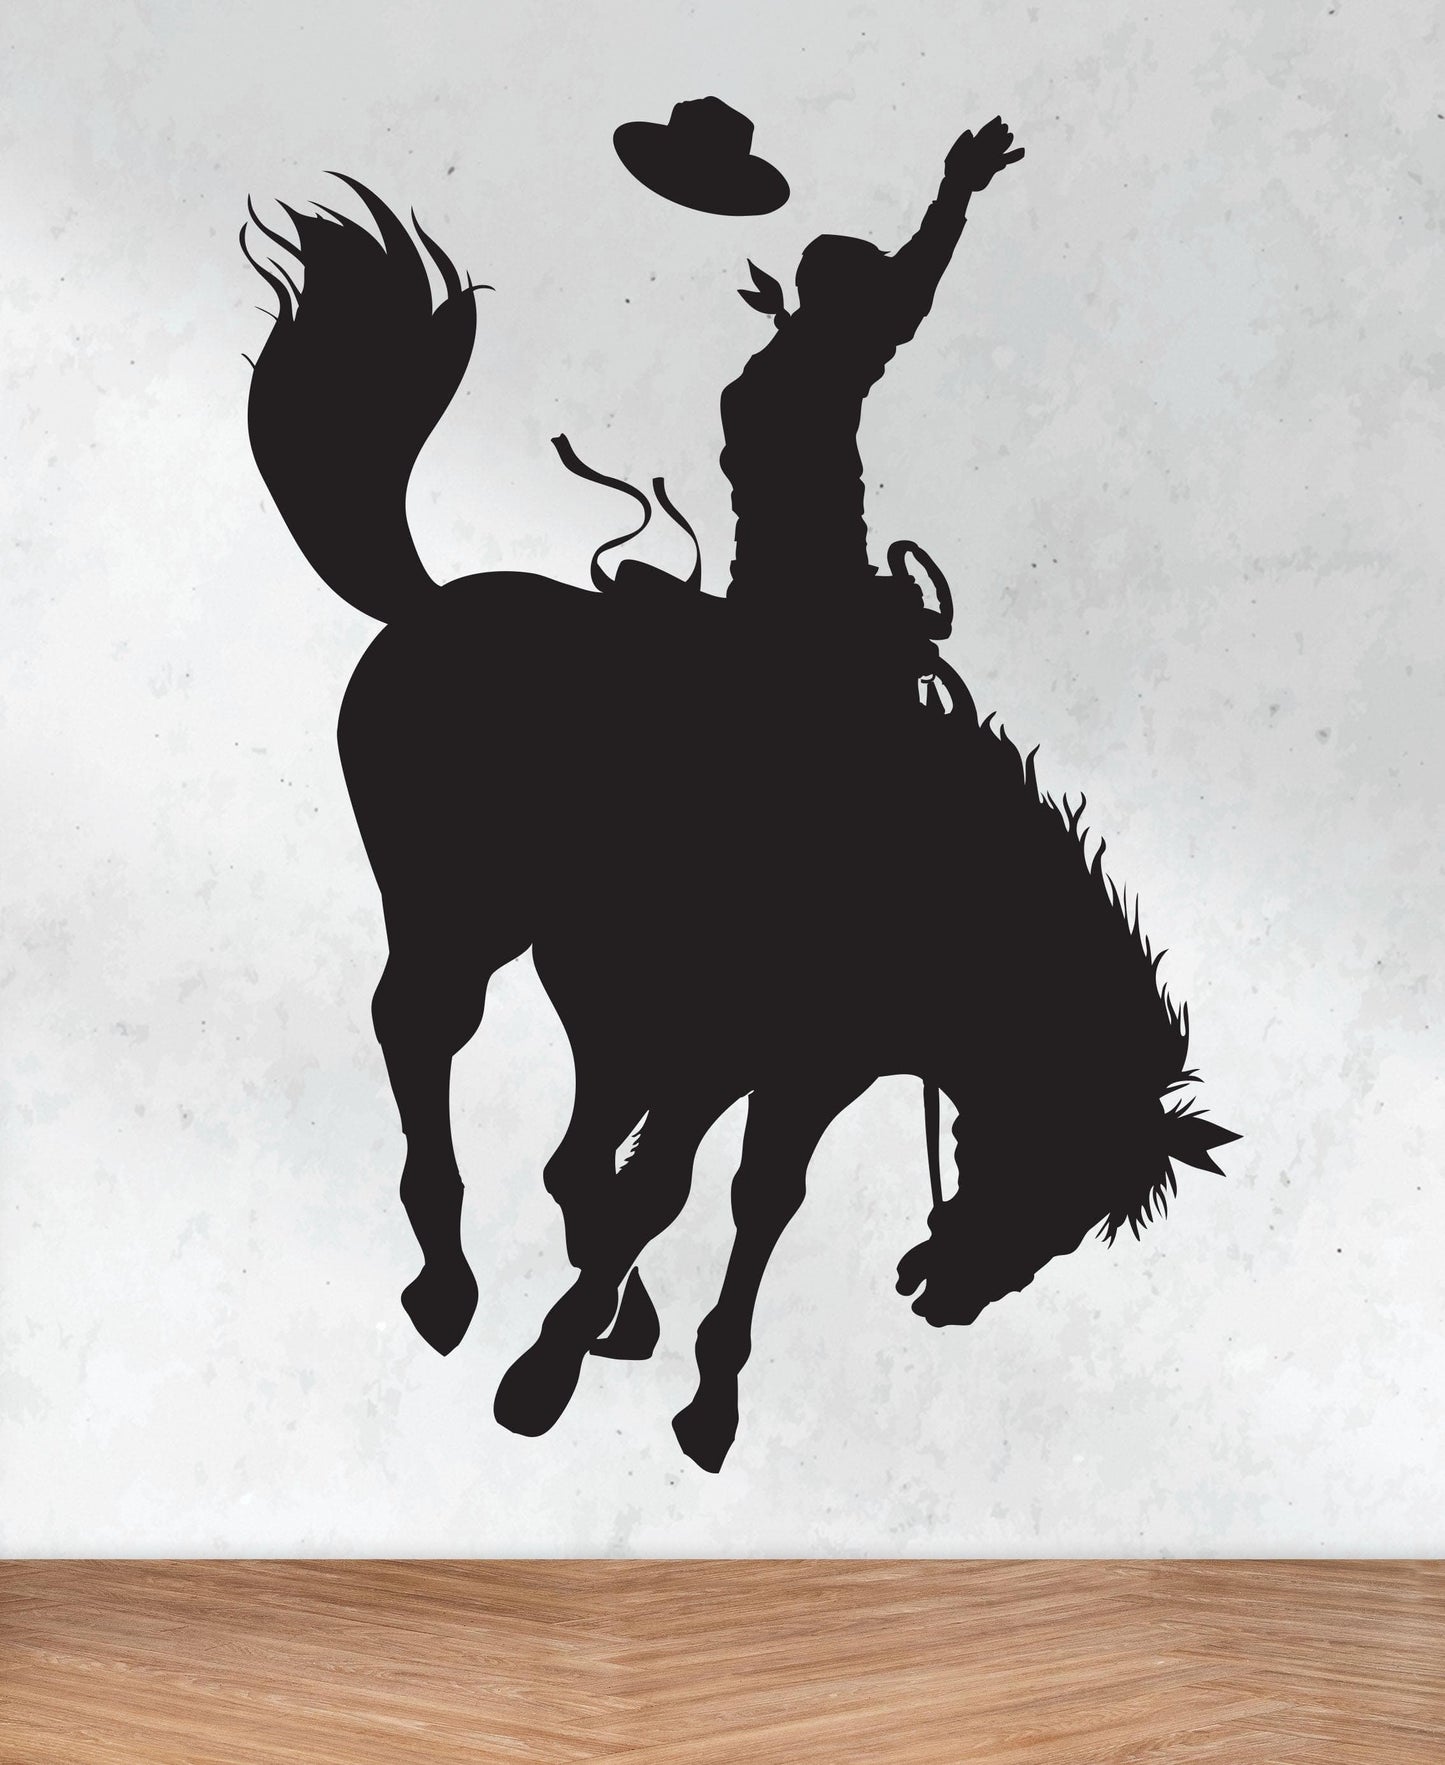 Bucking Cowboy Rider Wall Decal Sticker. Western Country Rodeo Cowboy Theme Decor. #6396